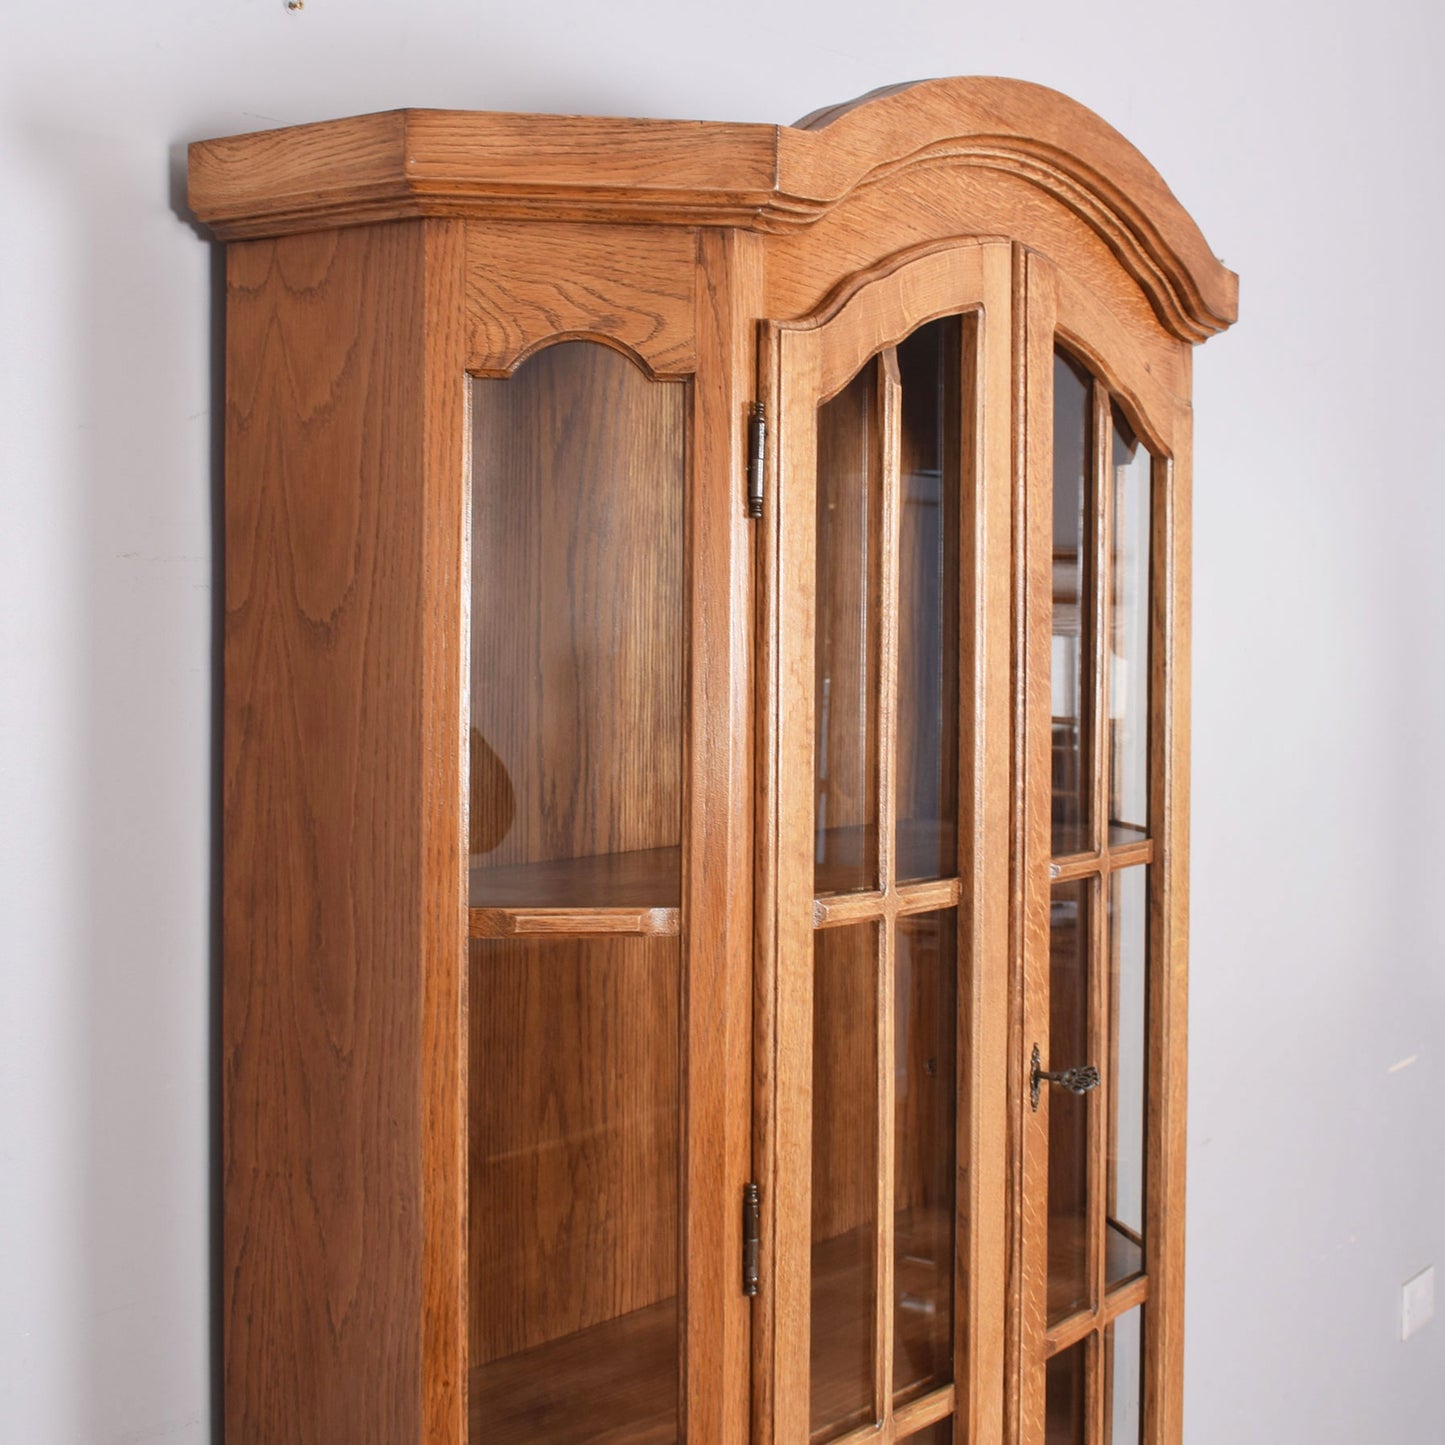 Oak Vitrine Display Cabinet